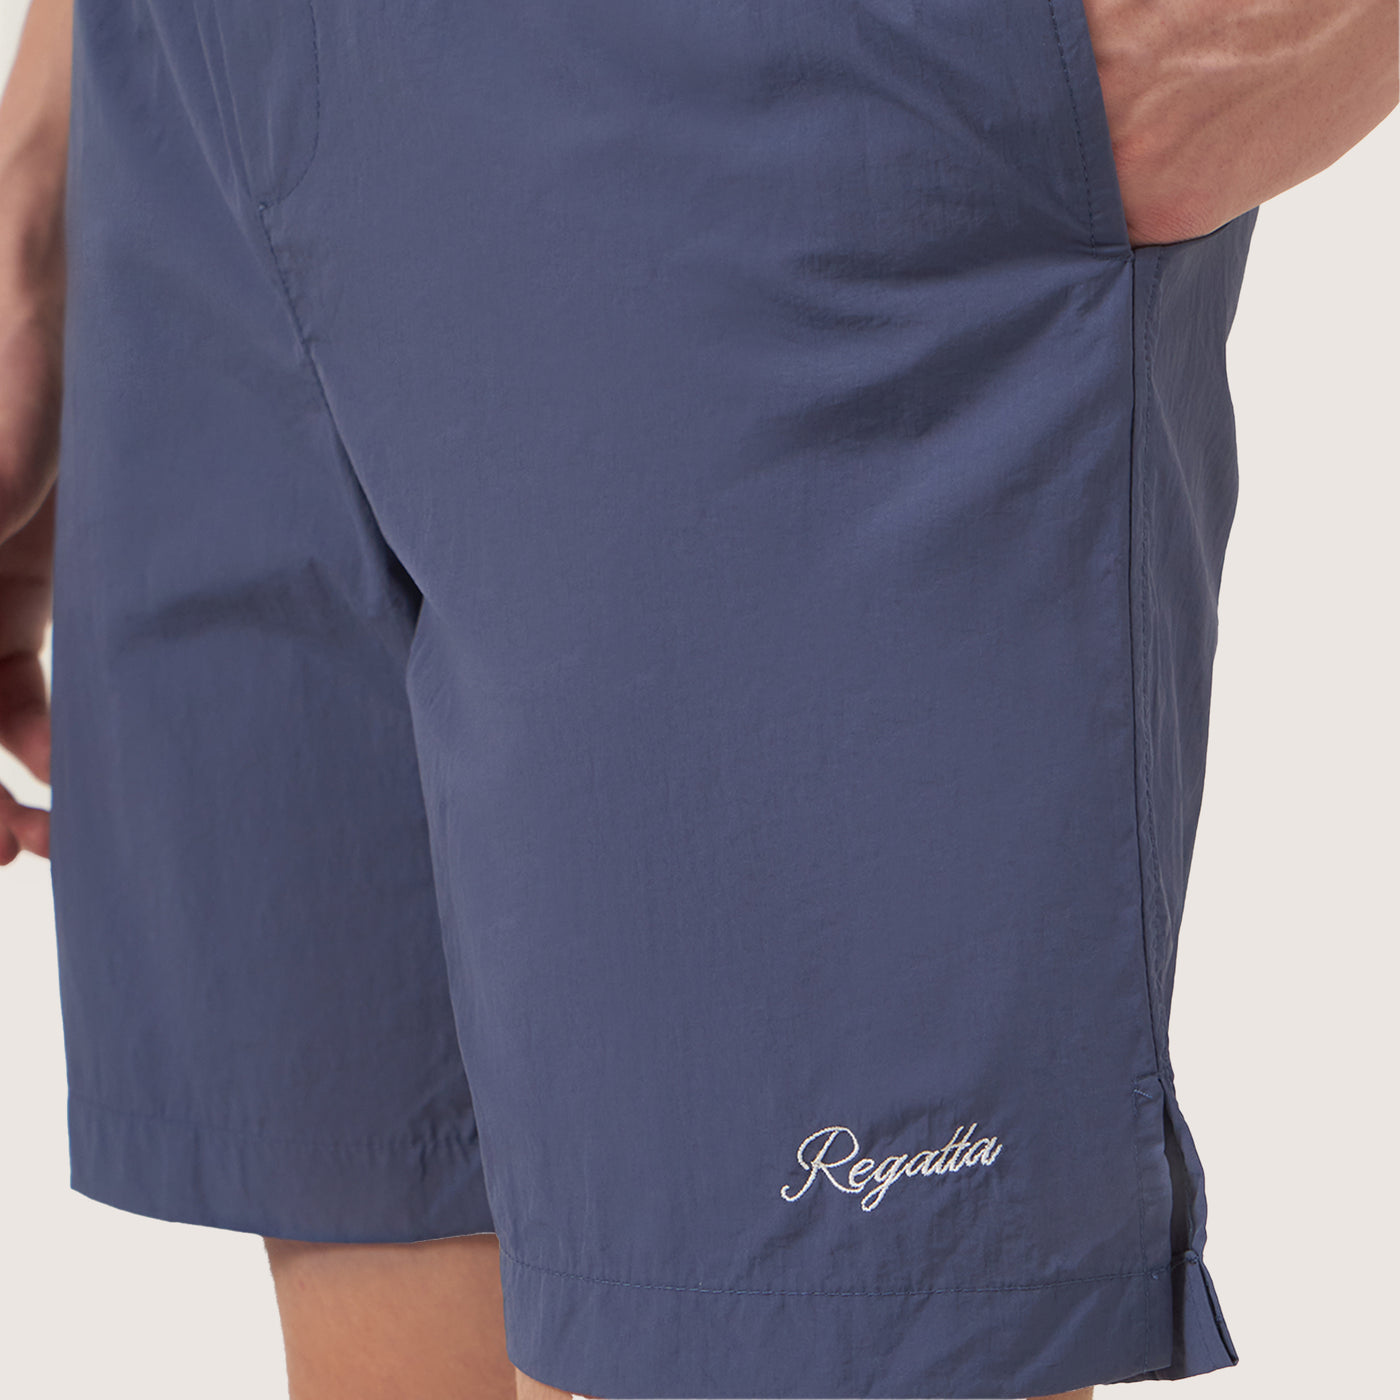 Nylon Hybrid Shorts with Hem Branding and Contrast Color Drawstring